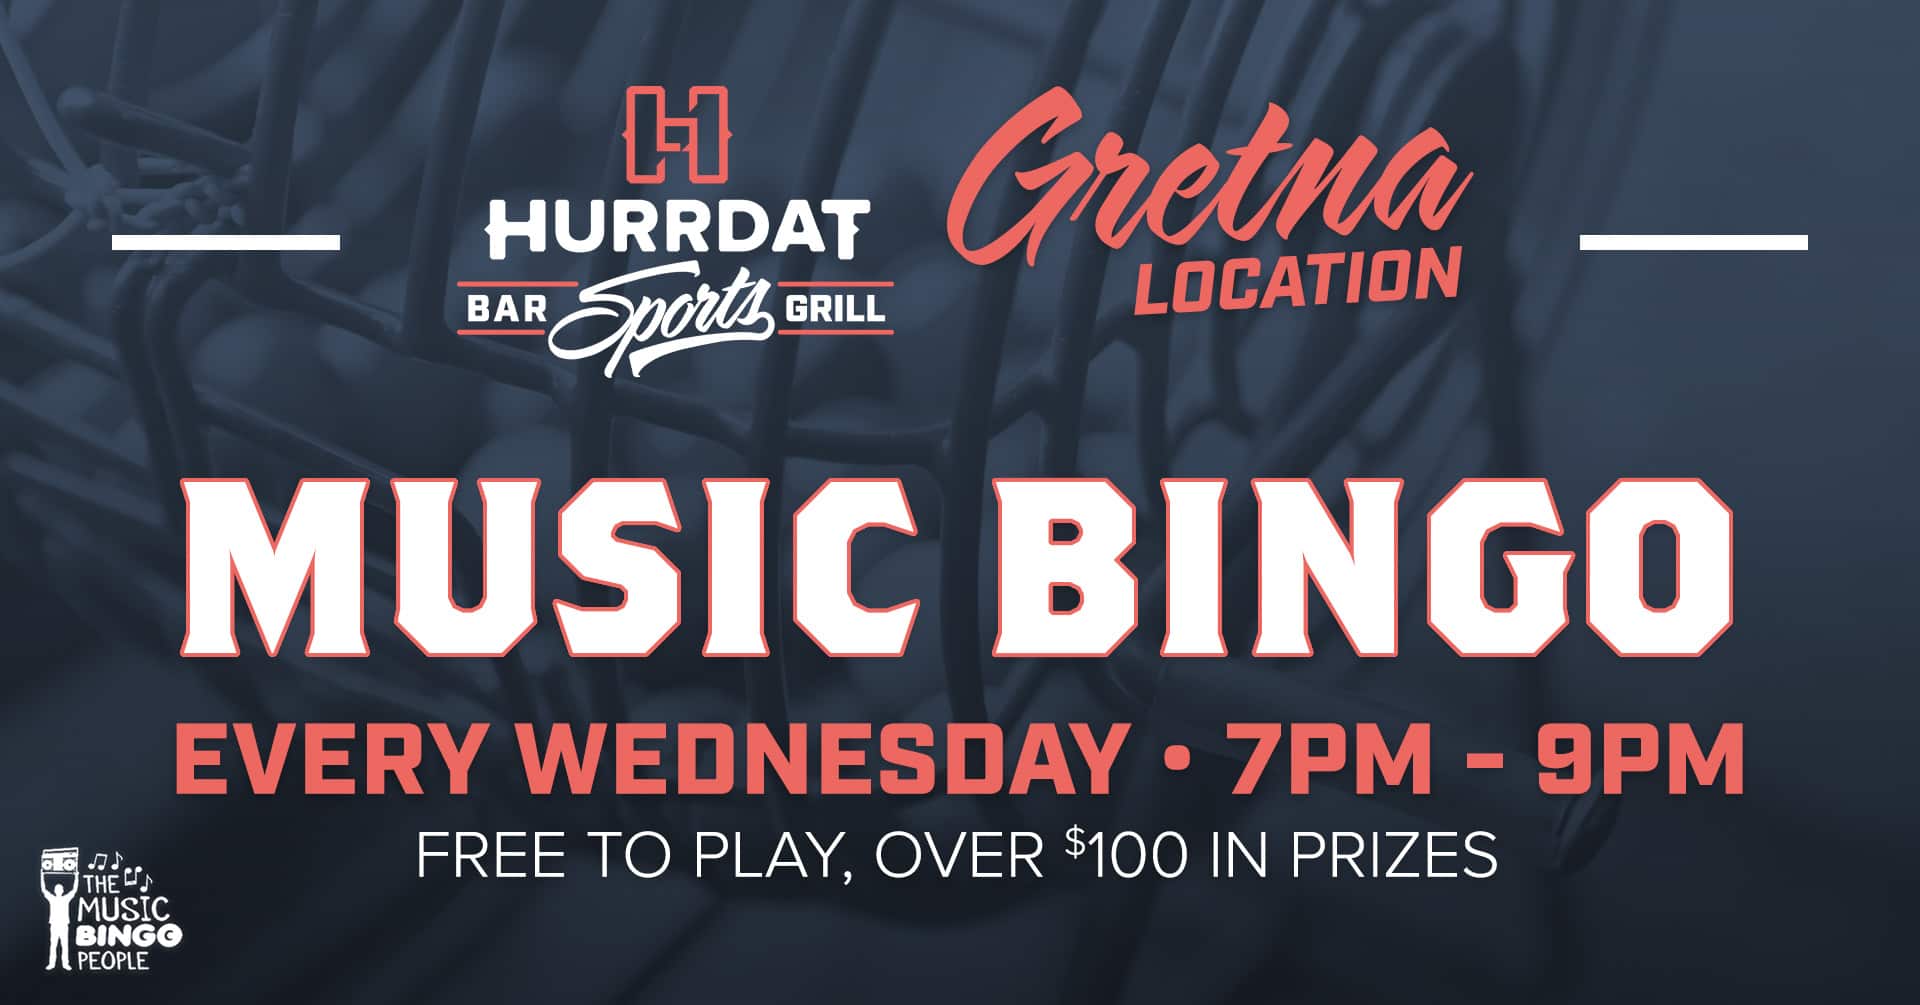 Music Bingo every wednesday in Gretna at Hurrdat Sports Bar